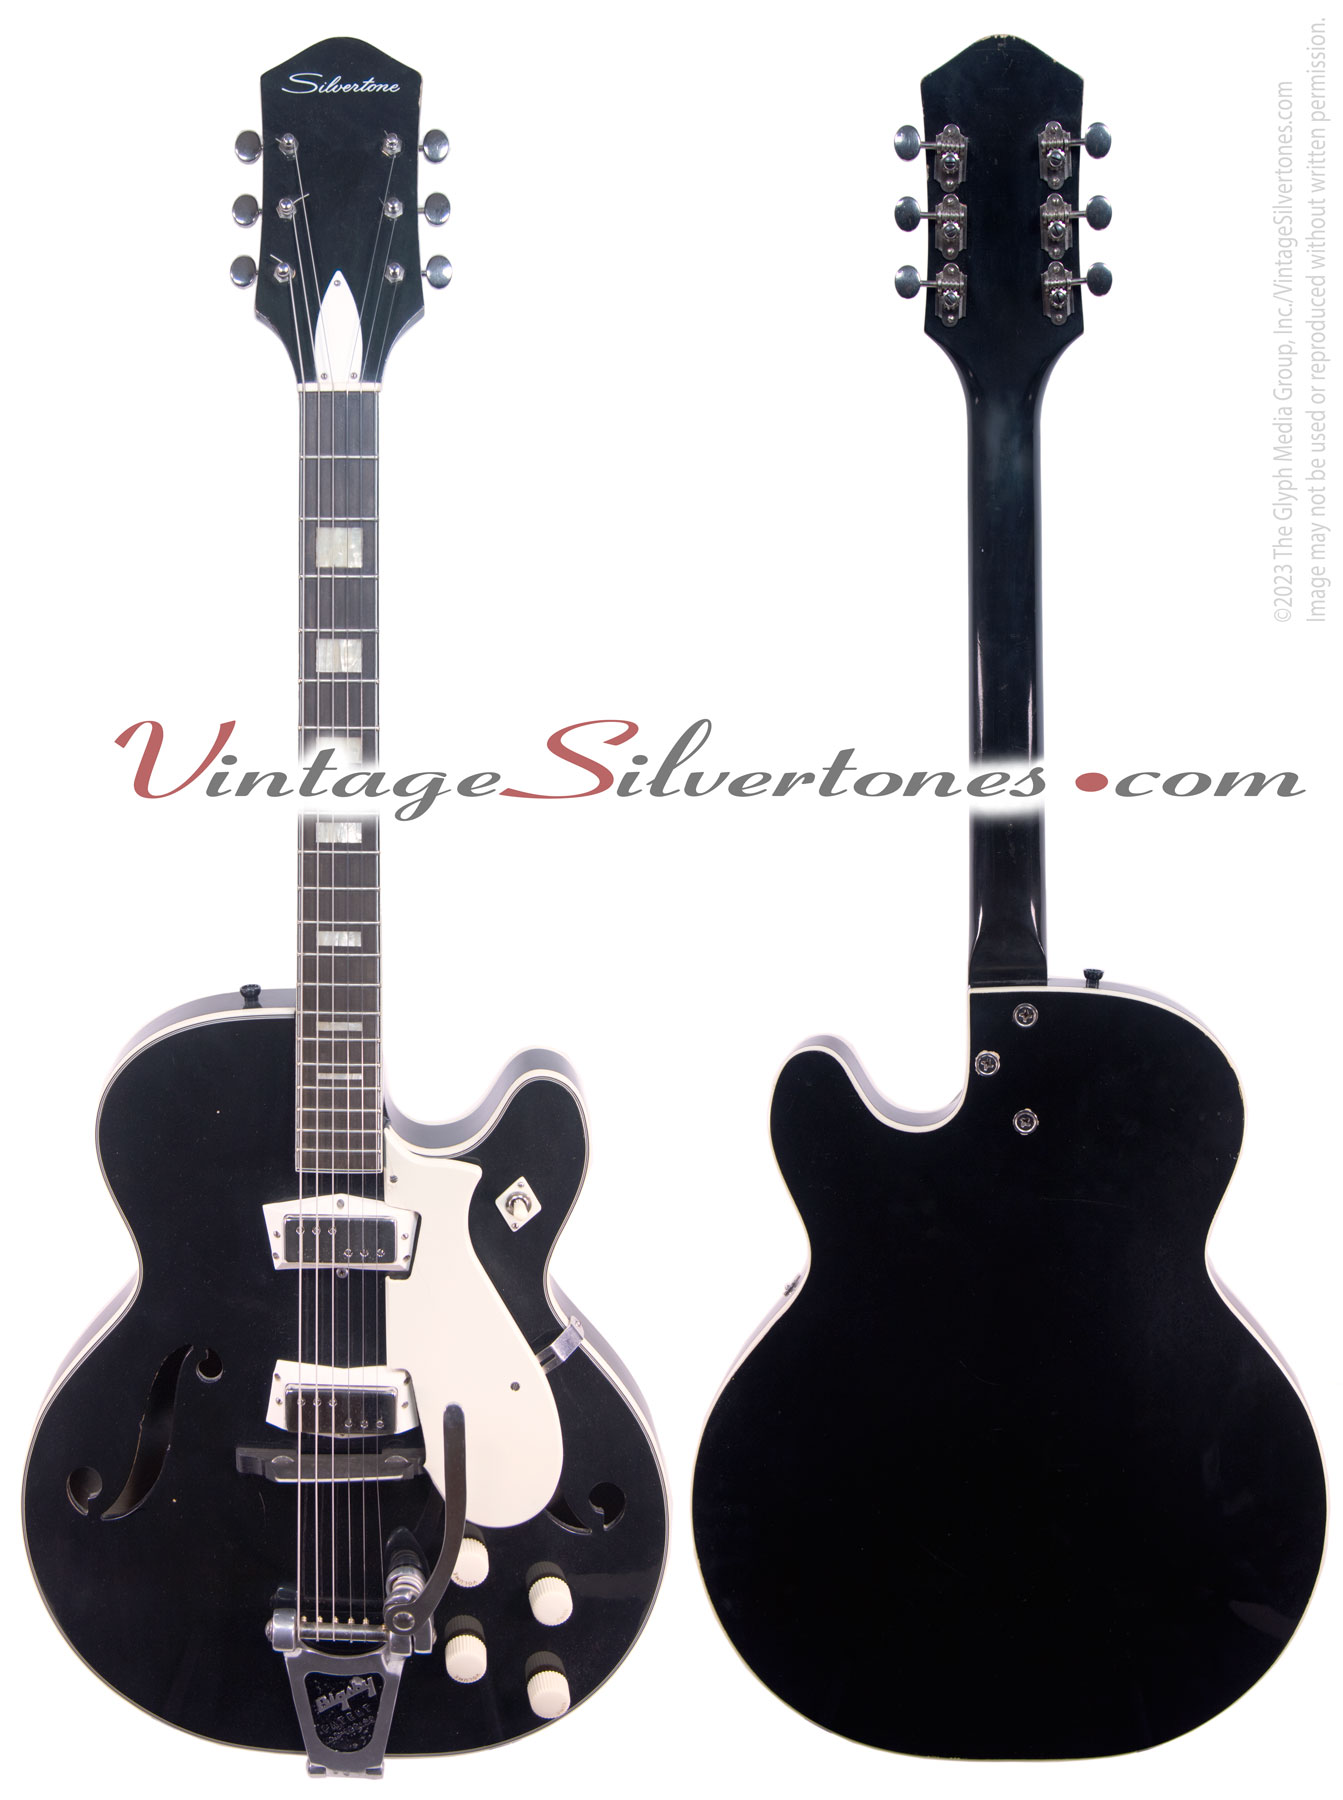 Silvertone 1446 electric guitar two pickups, bigsby tremolo, black ohsc made in Chicago IL circa 1962